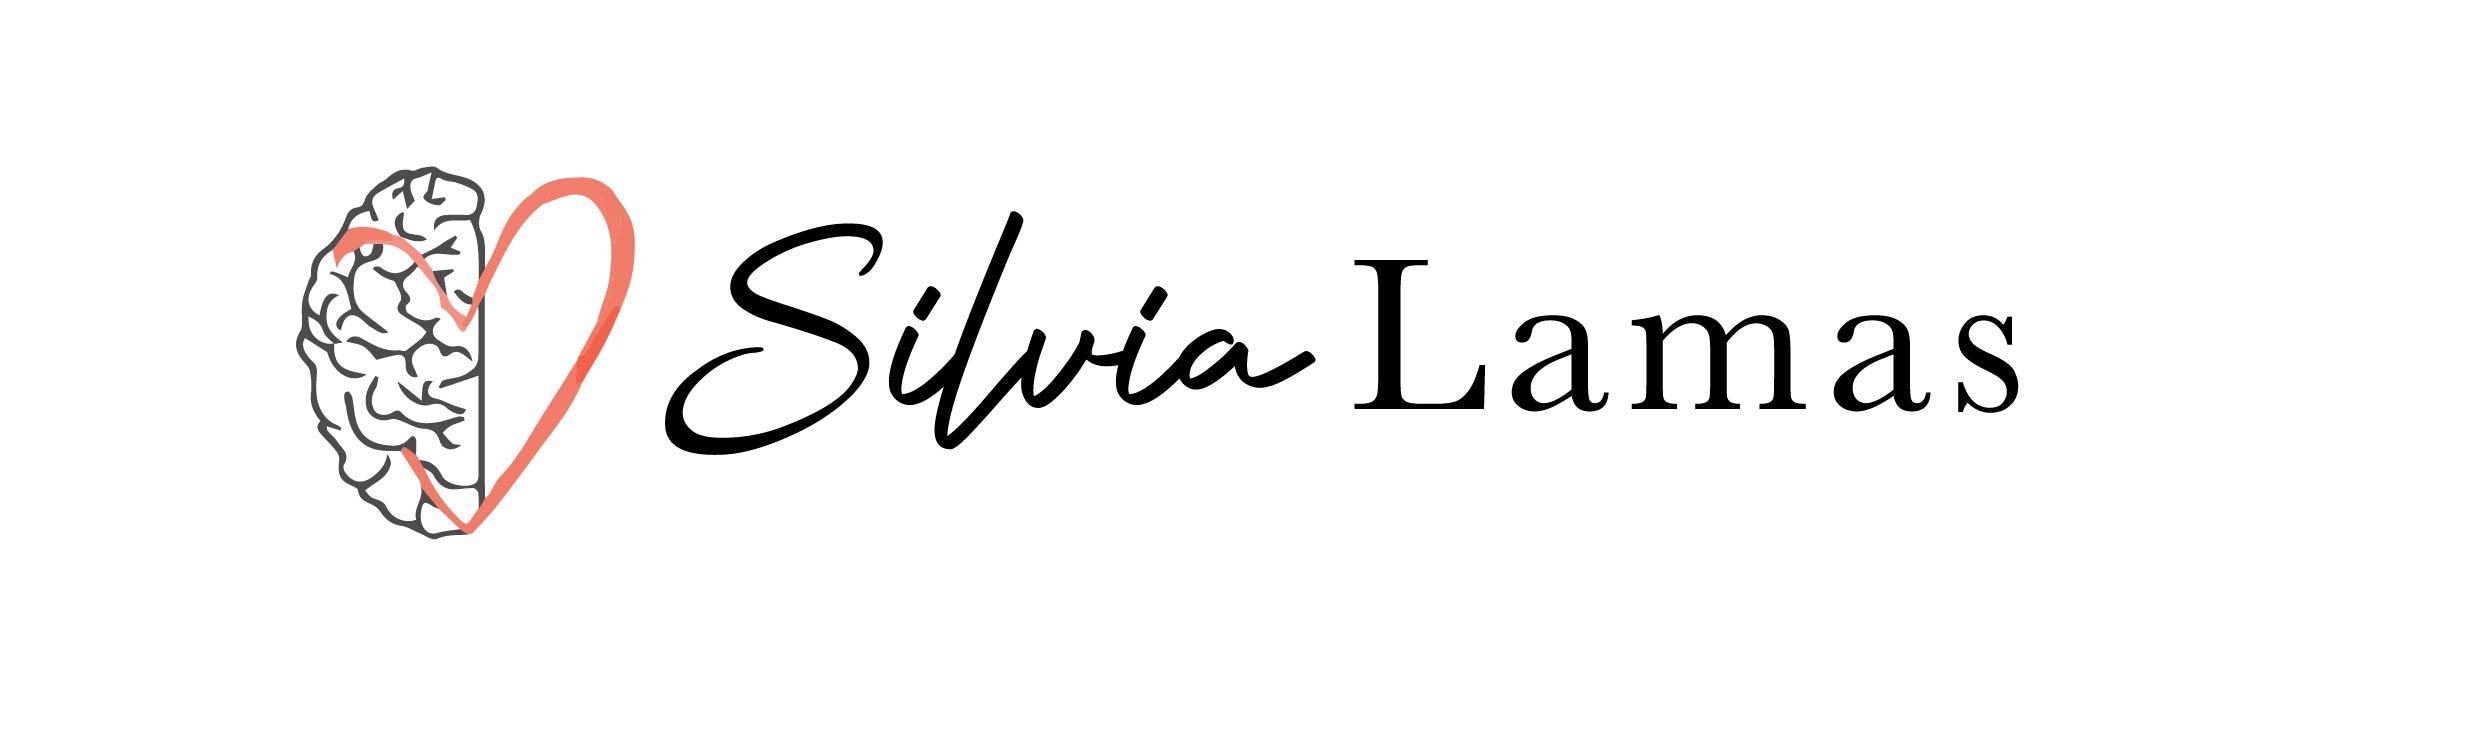 Personal & Professional Development Silvia Lamas logo